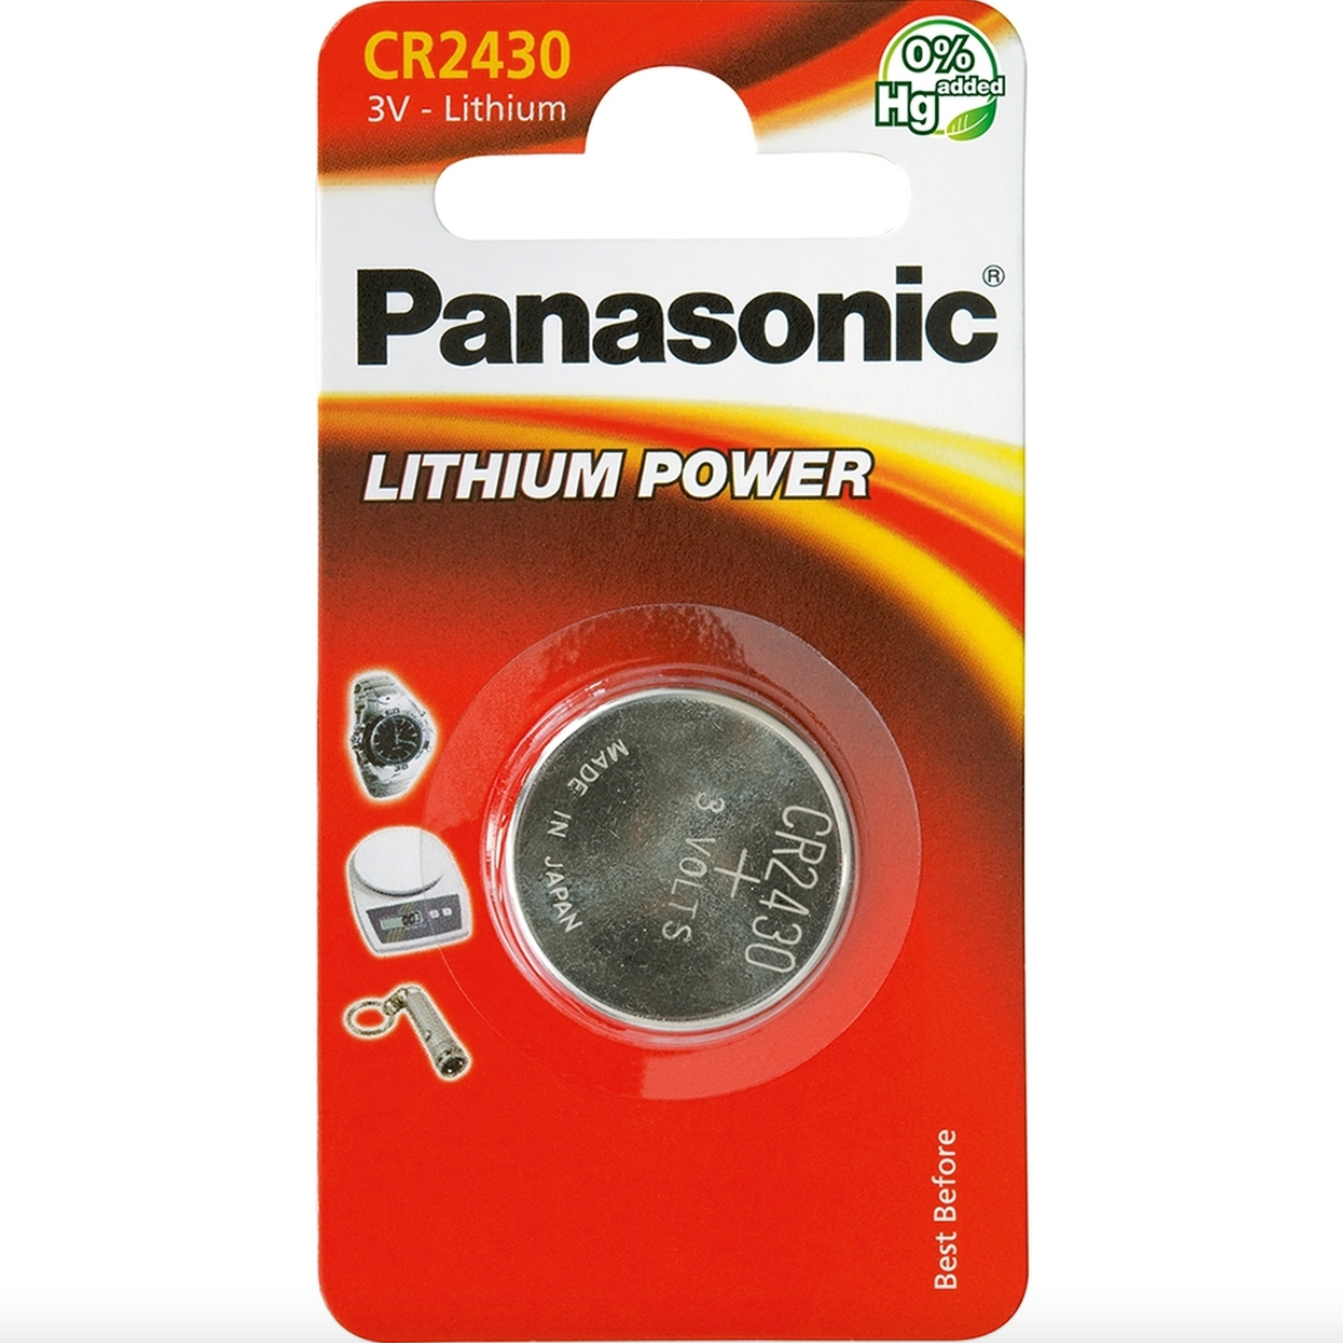 CR2430 Lithium Coin Battery